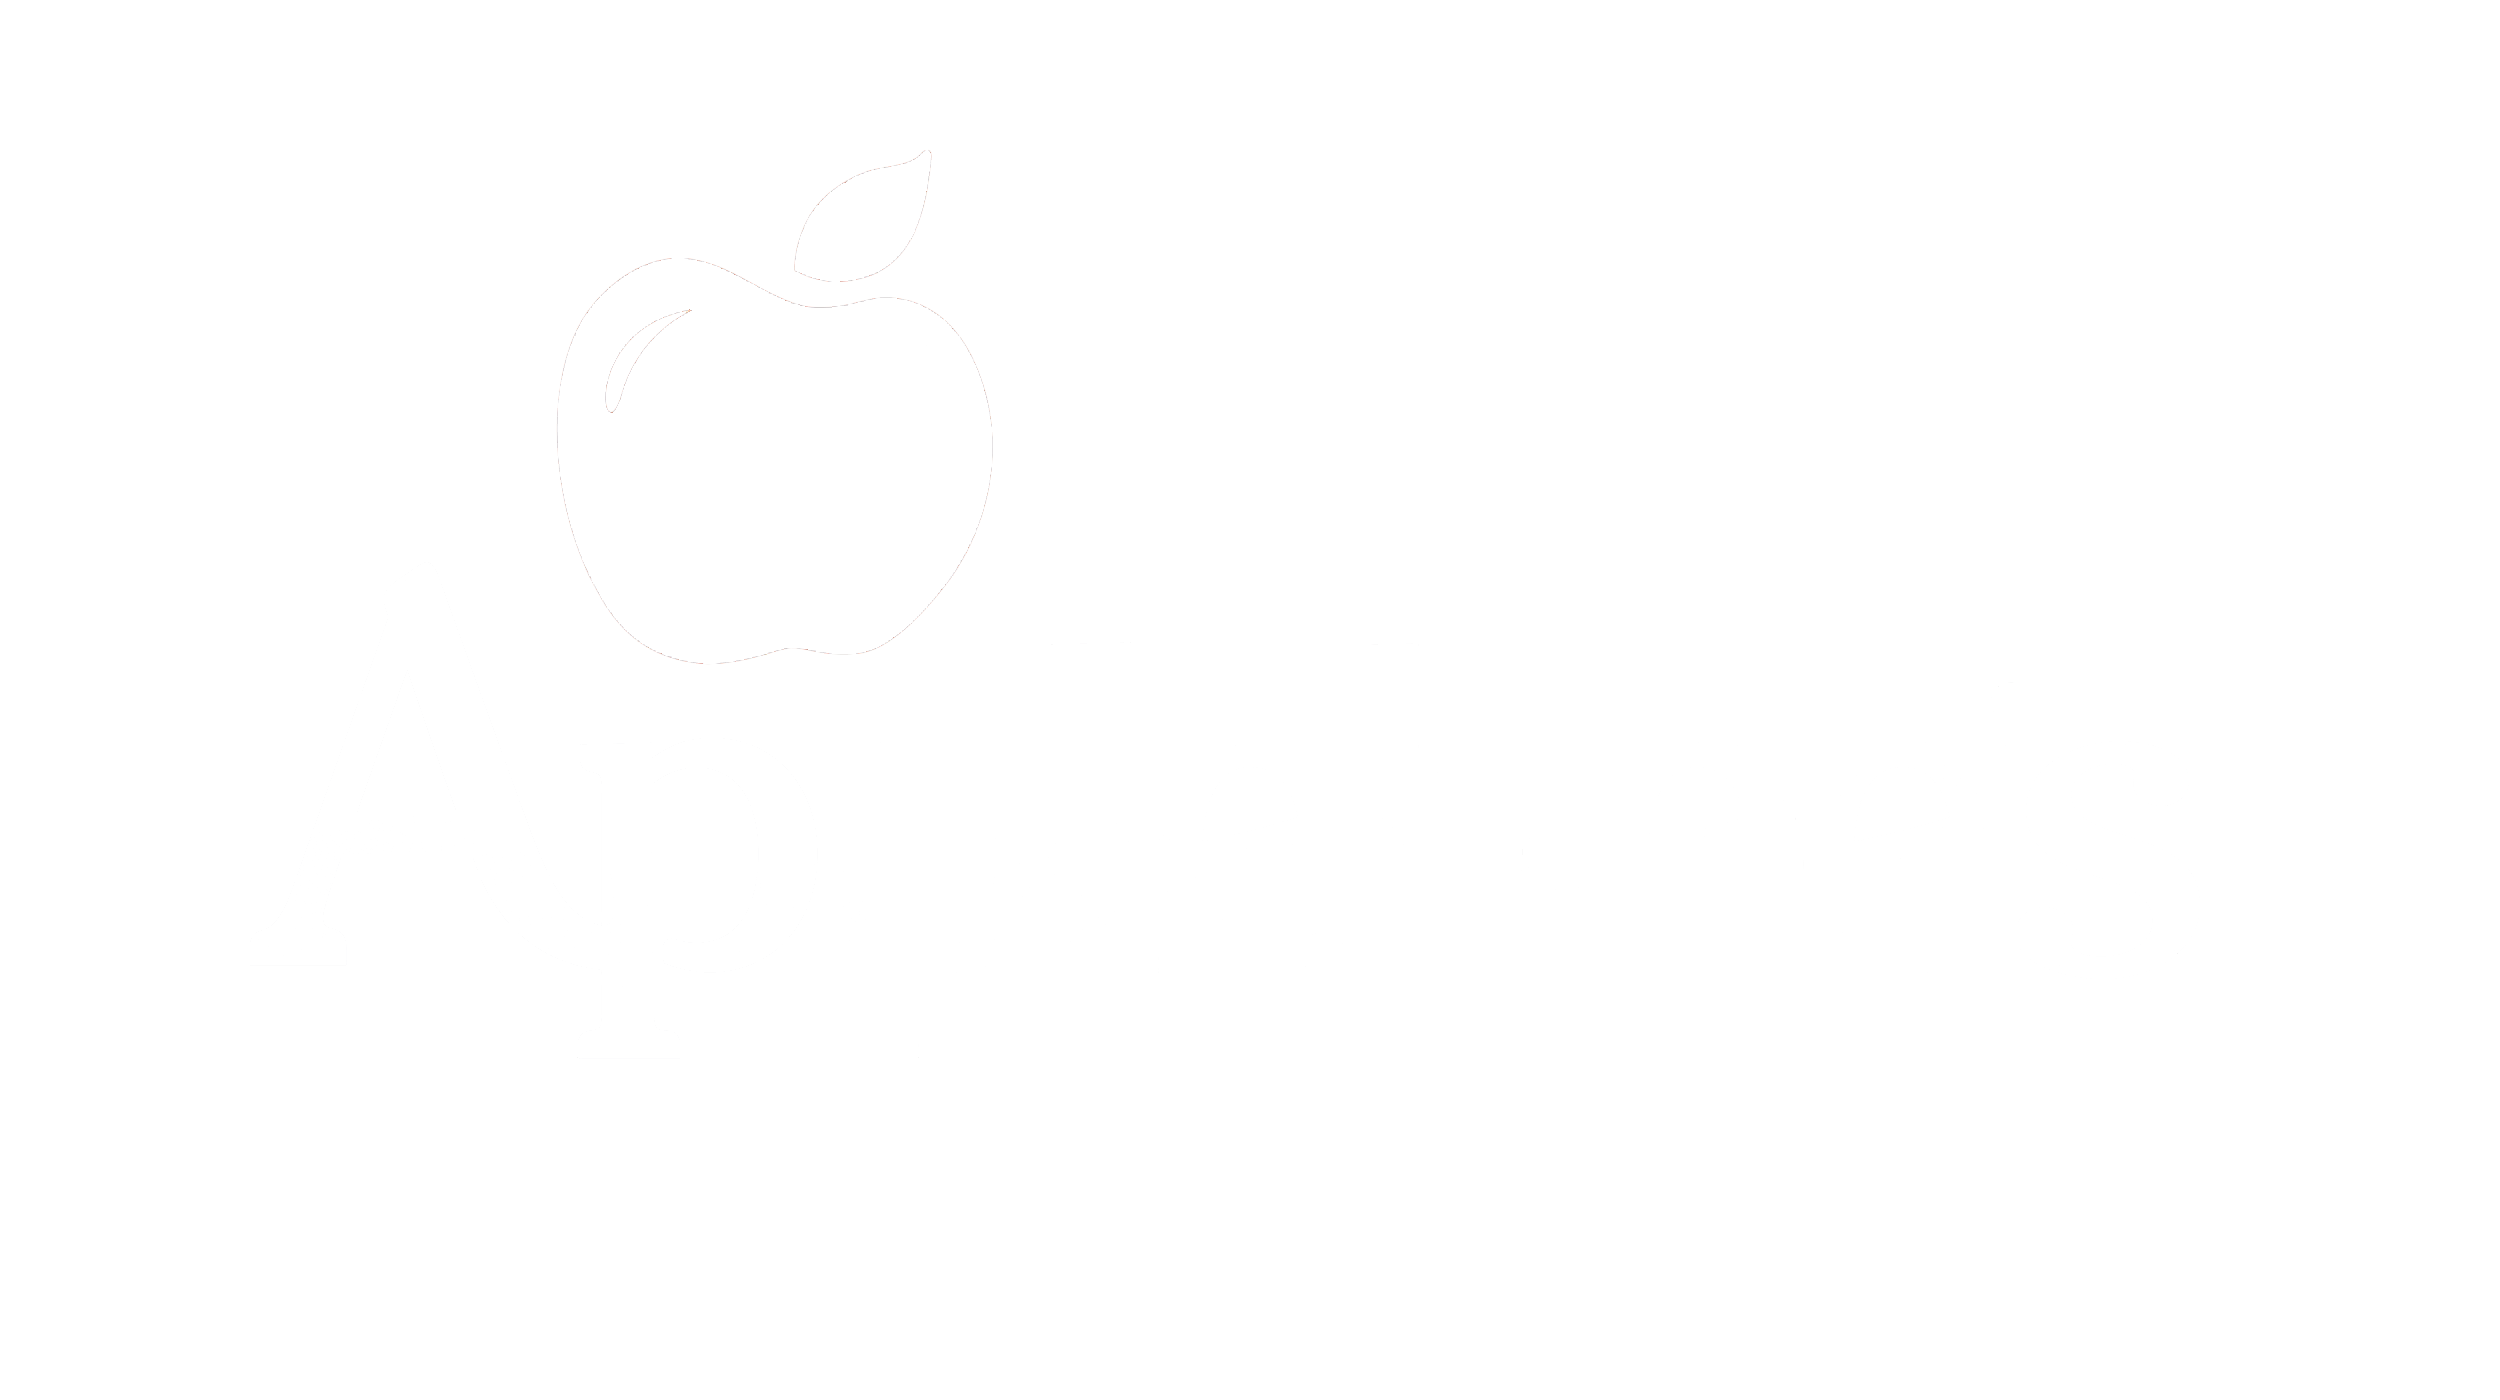 Applebees Logo